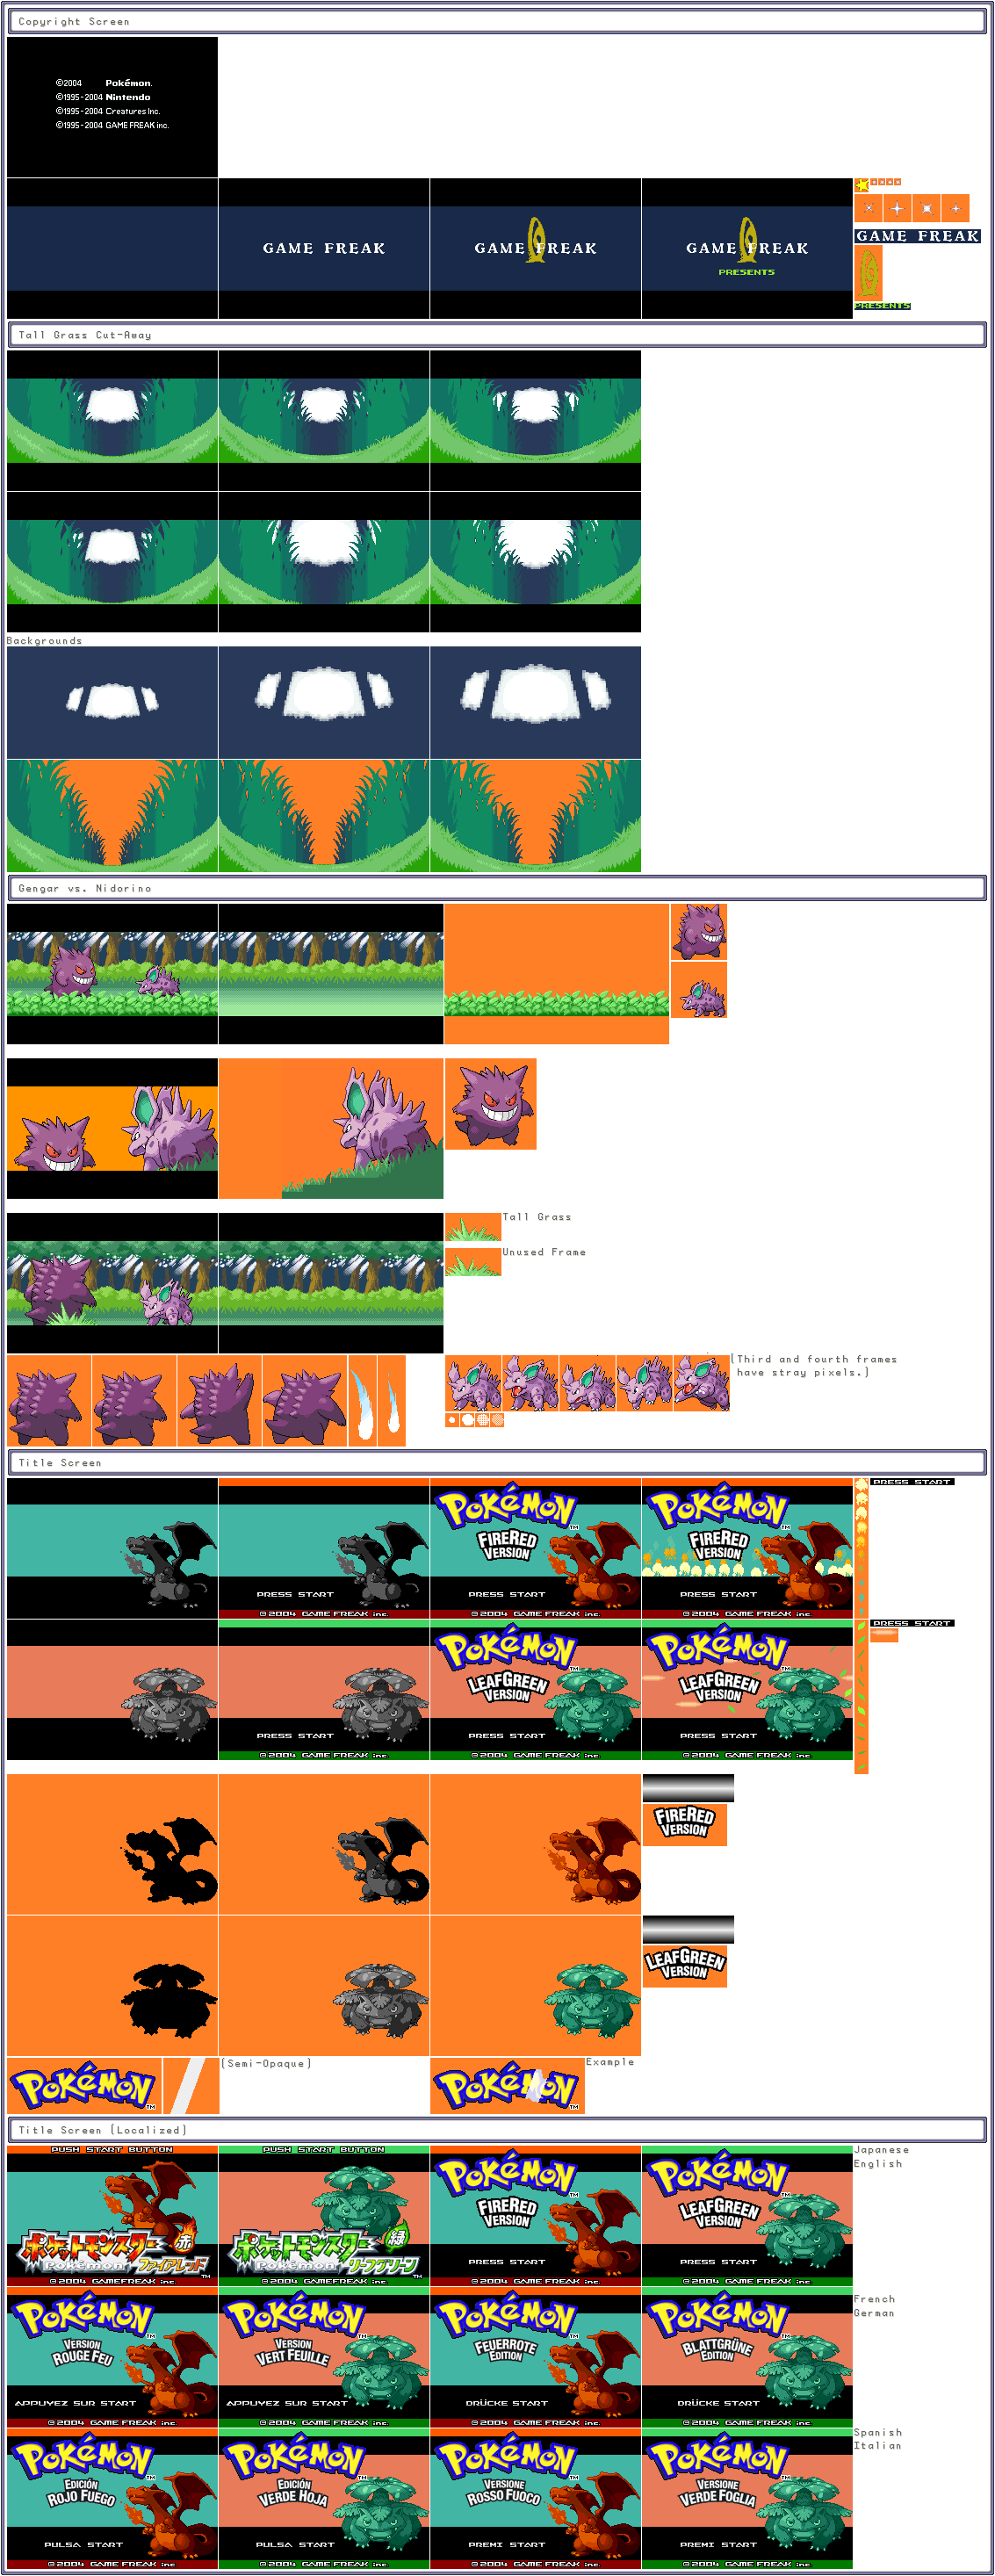 Pokémon FireRed / LeafGreen - Intro